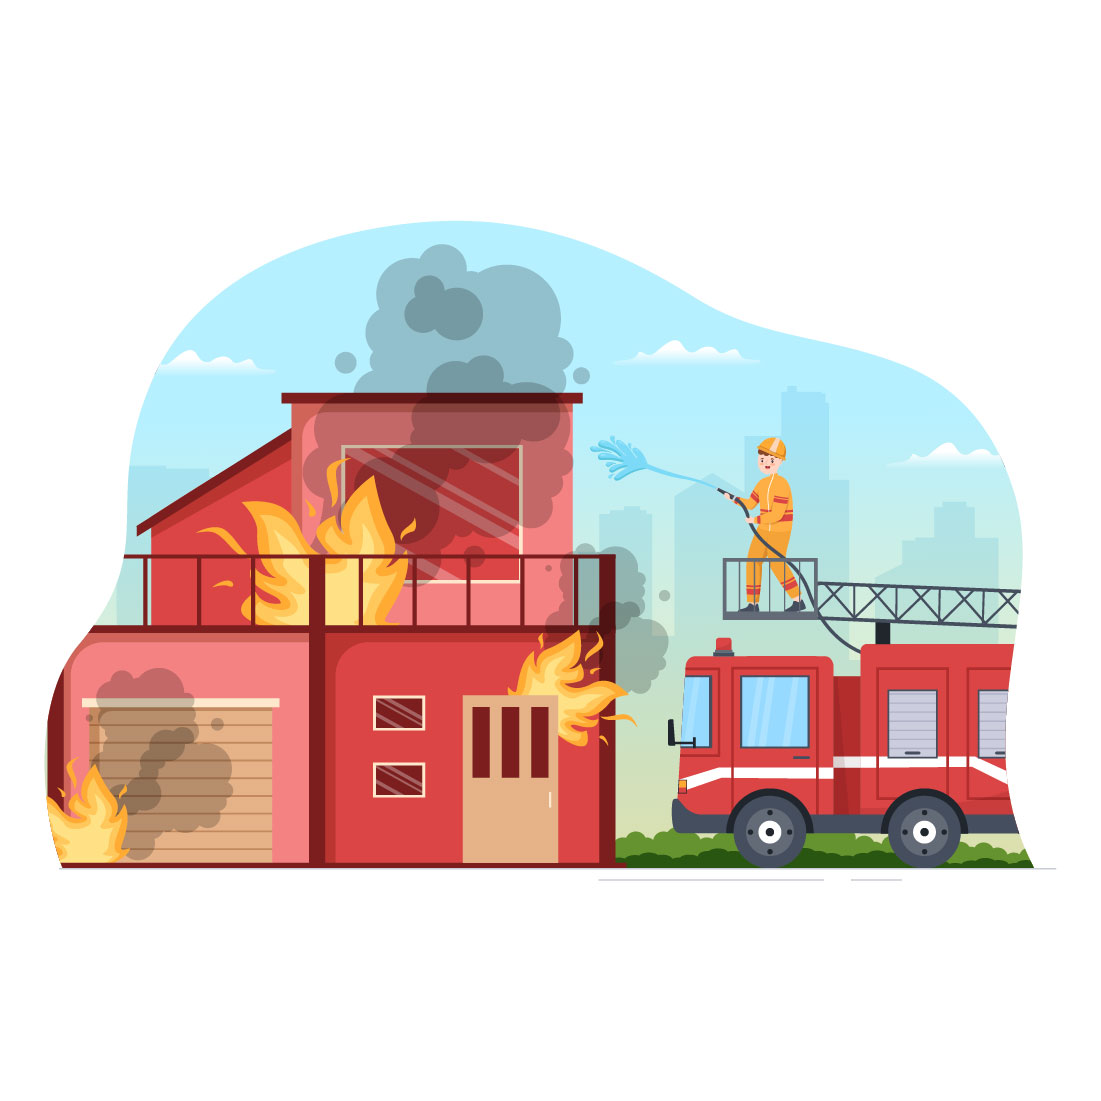 Cartoon Firefighter Design Illustration cover image.